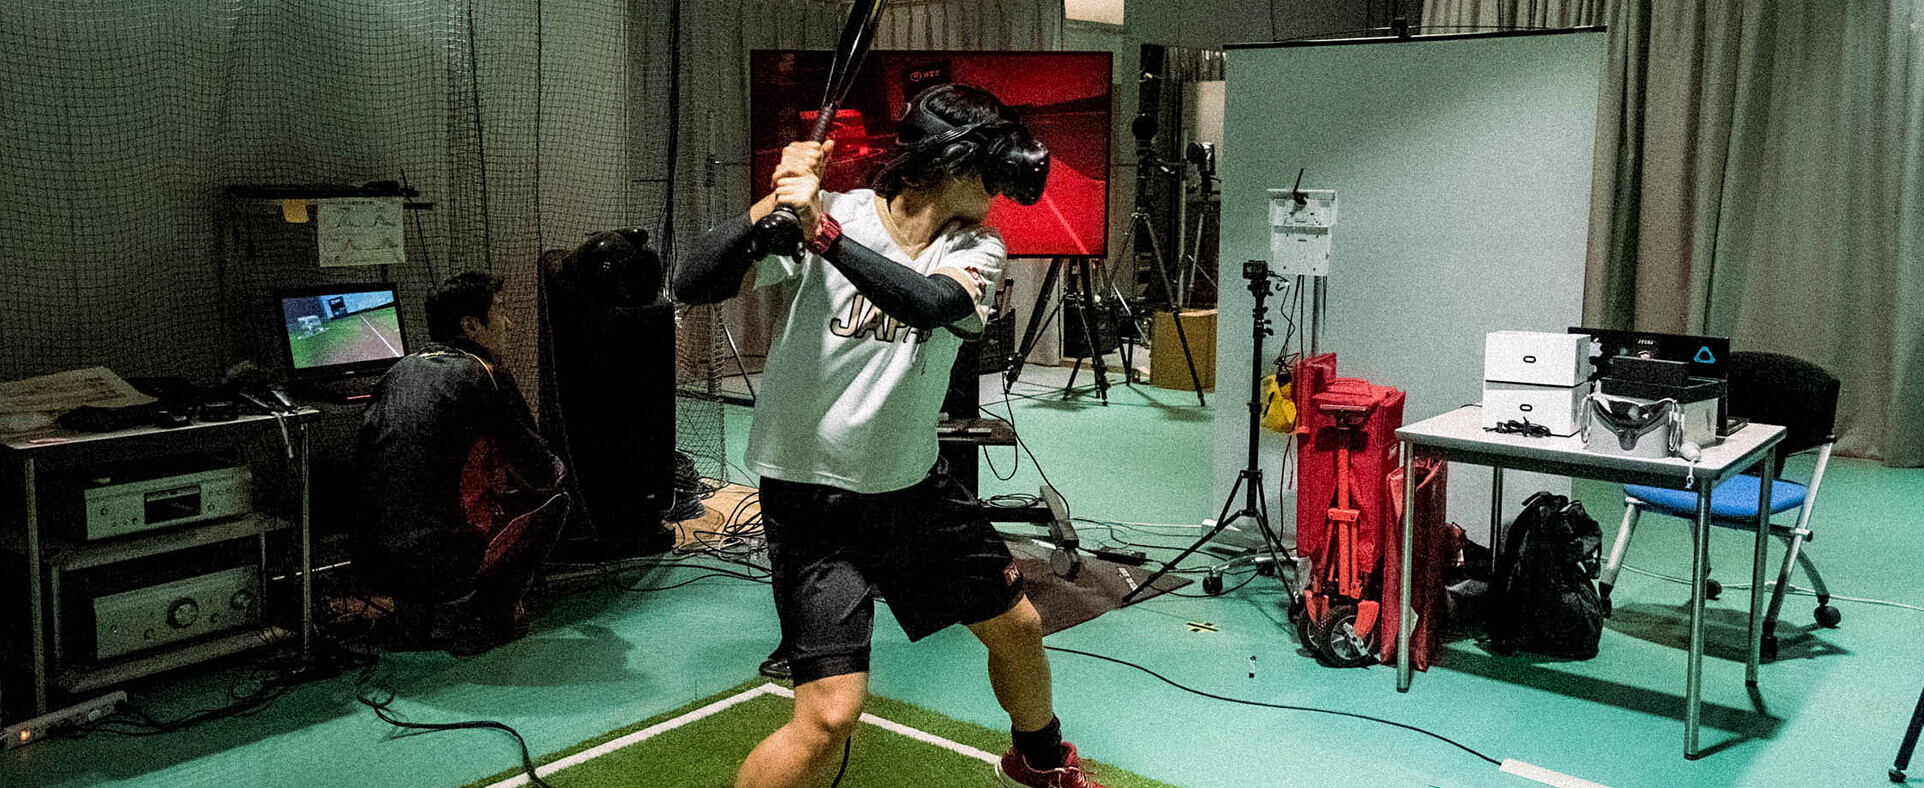 Image: Simulation VR system for softball